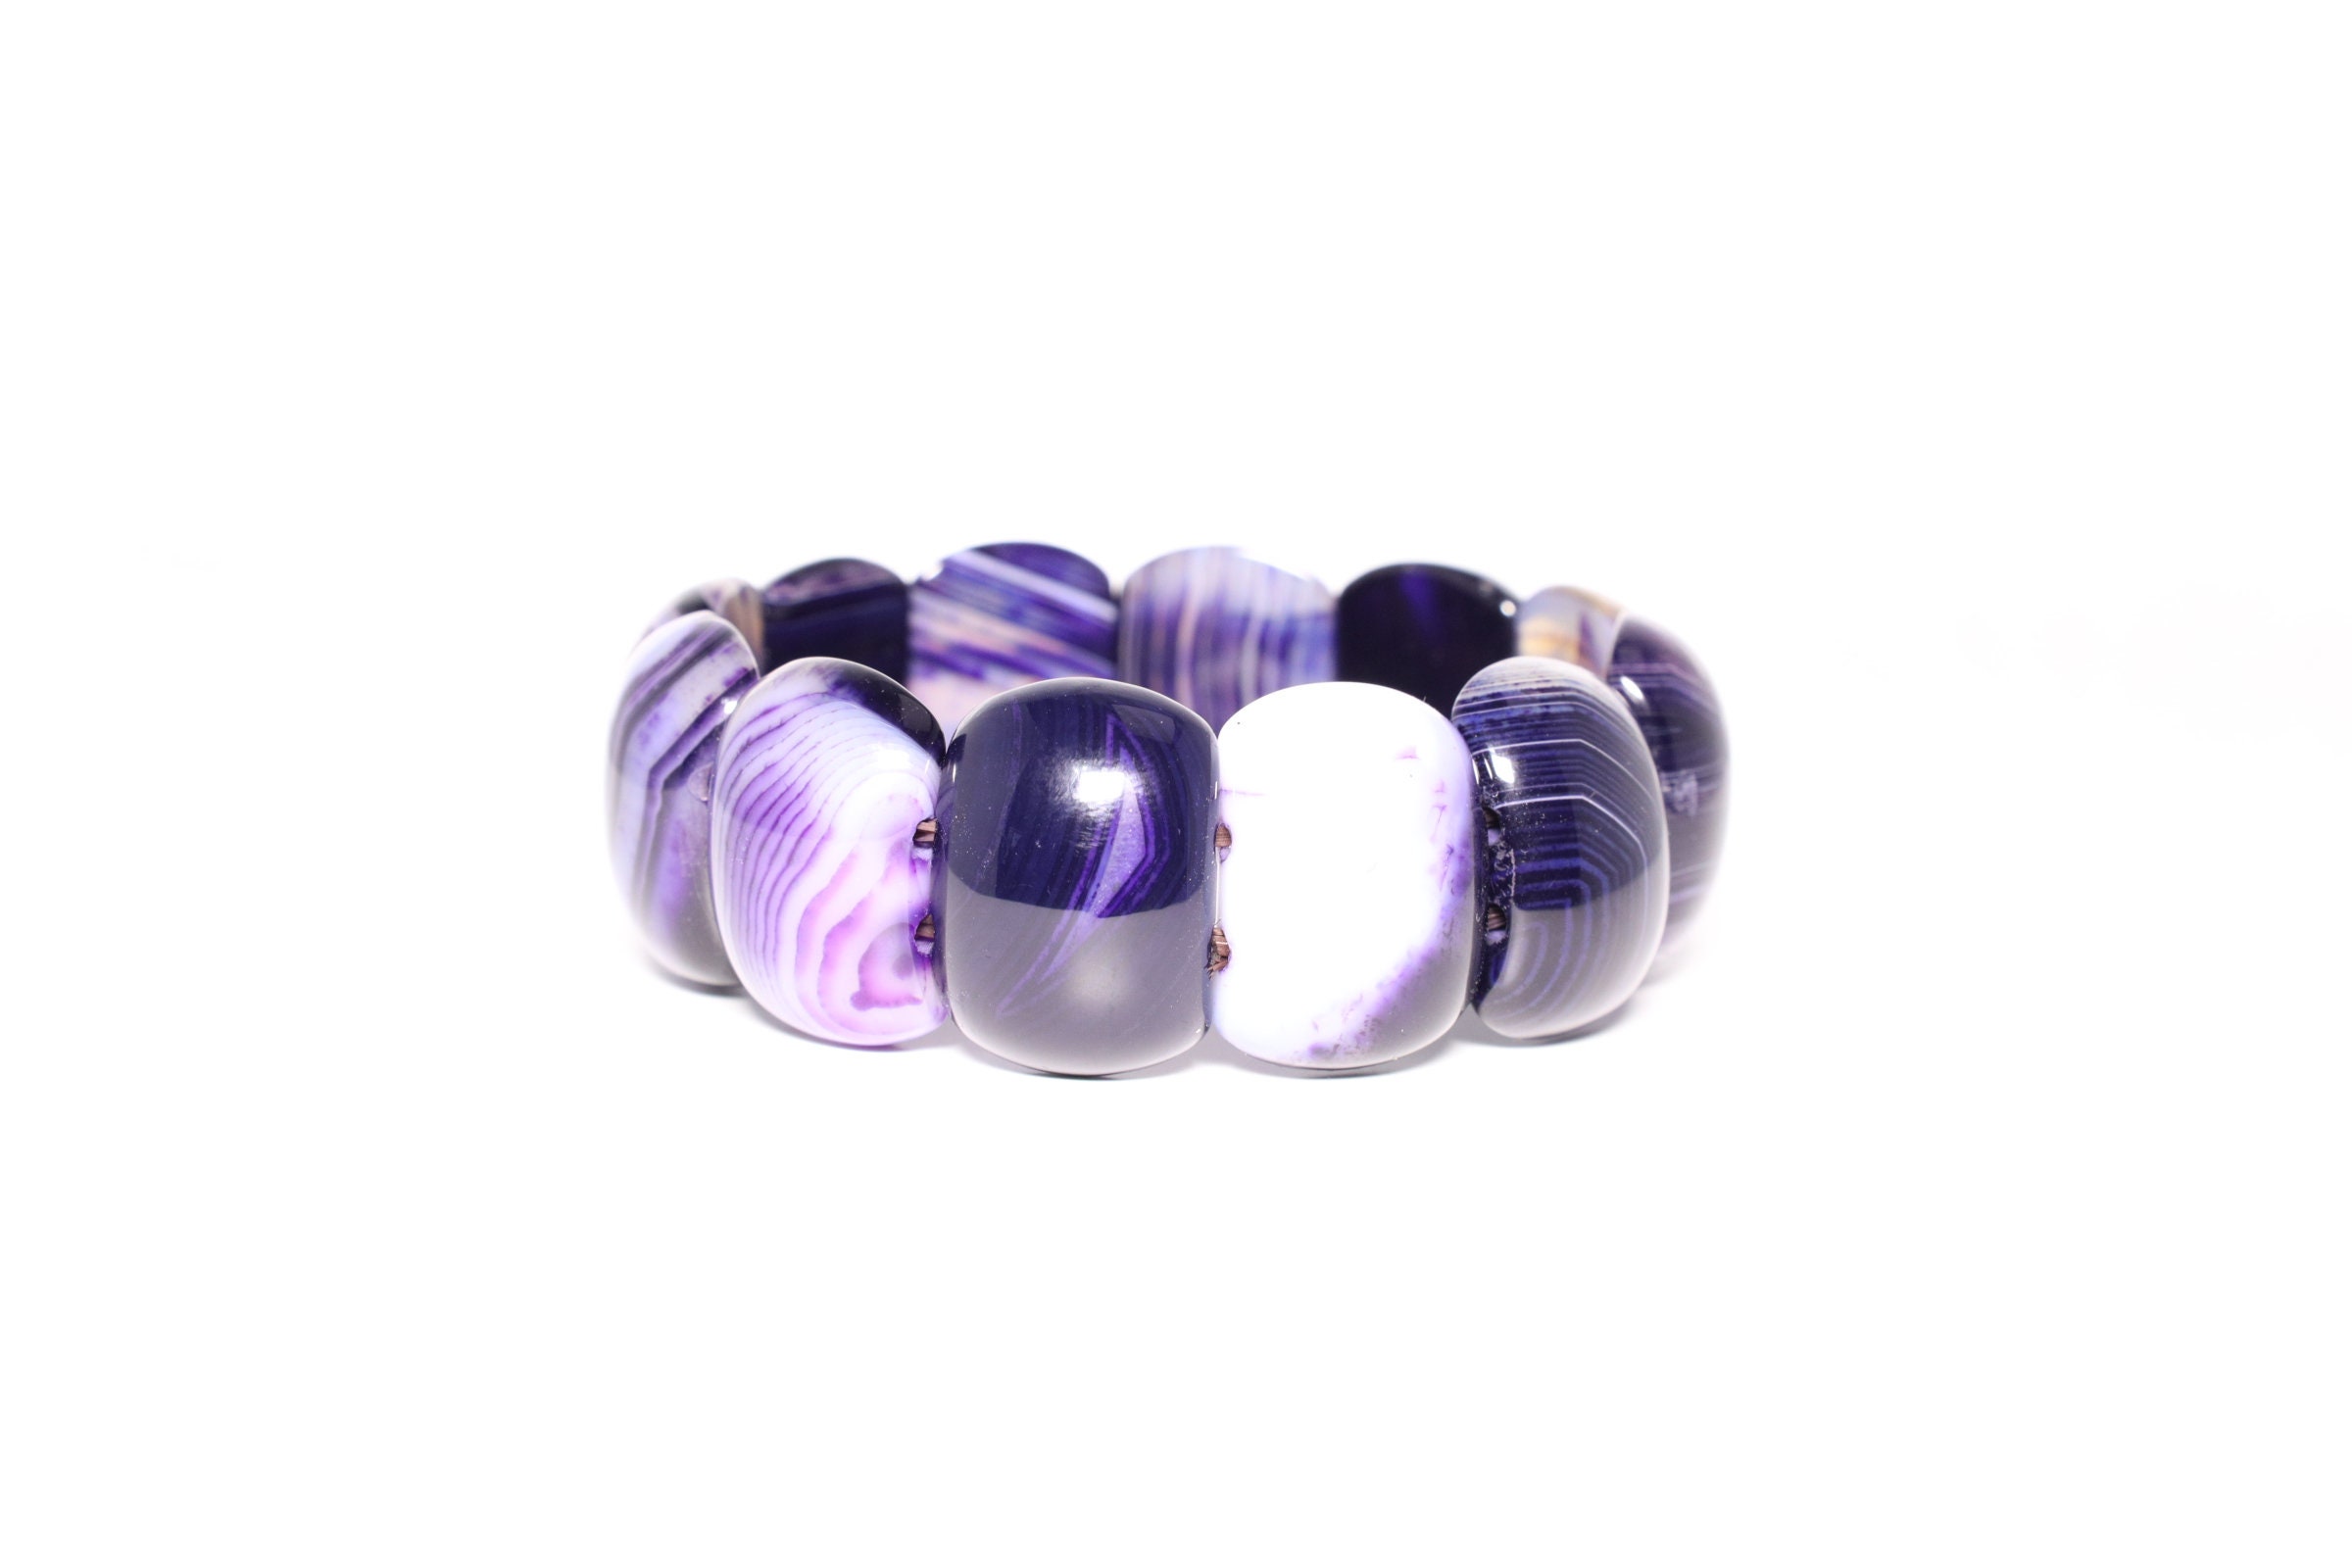 Handmade Natural Purple Agate Crystal Healing Chakra Gemstone Stretch Bracelet